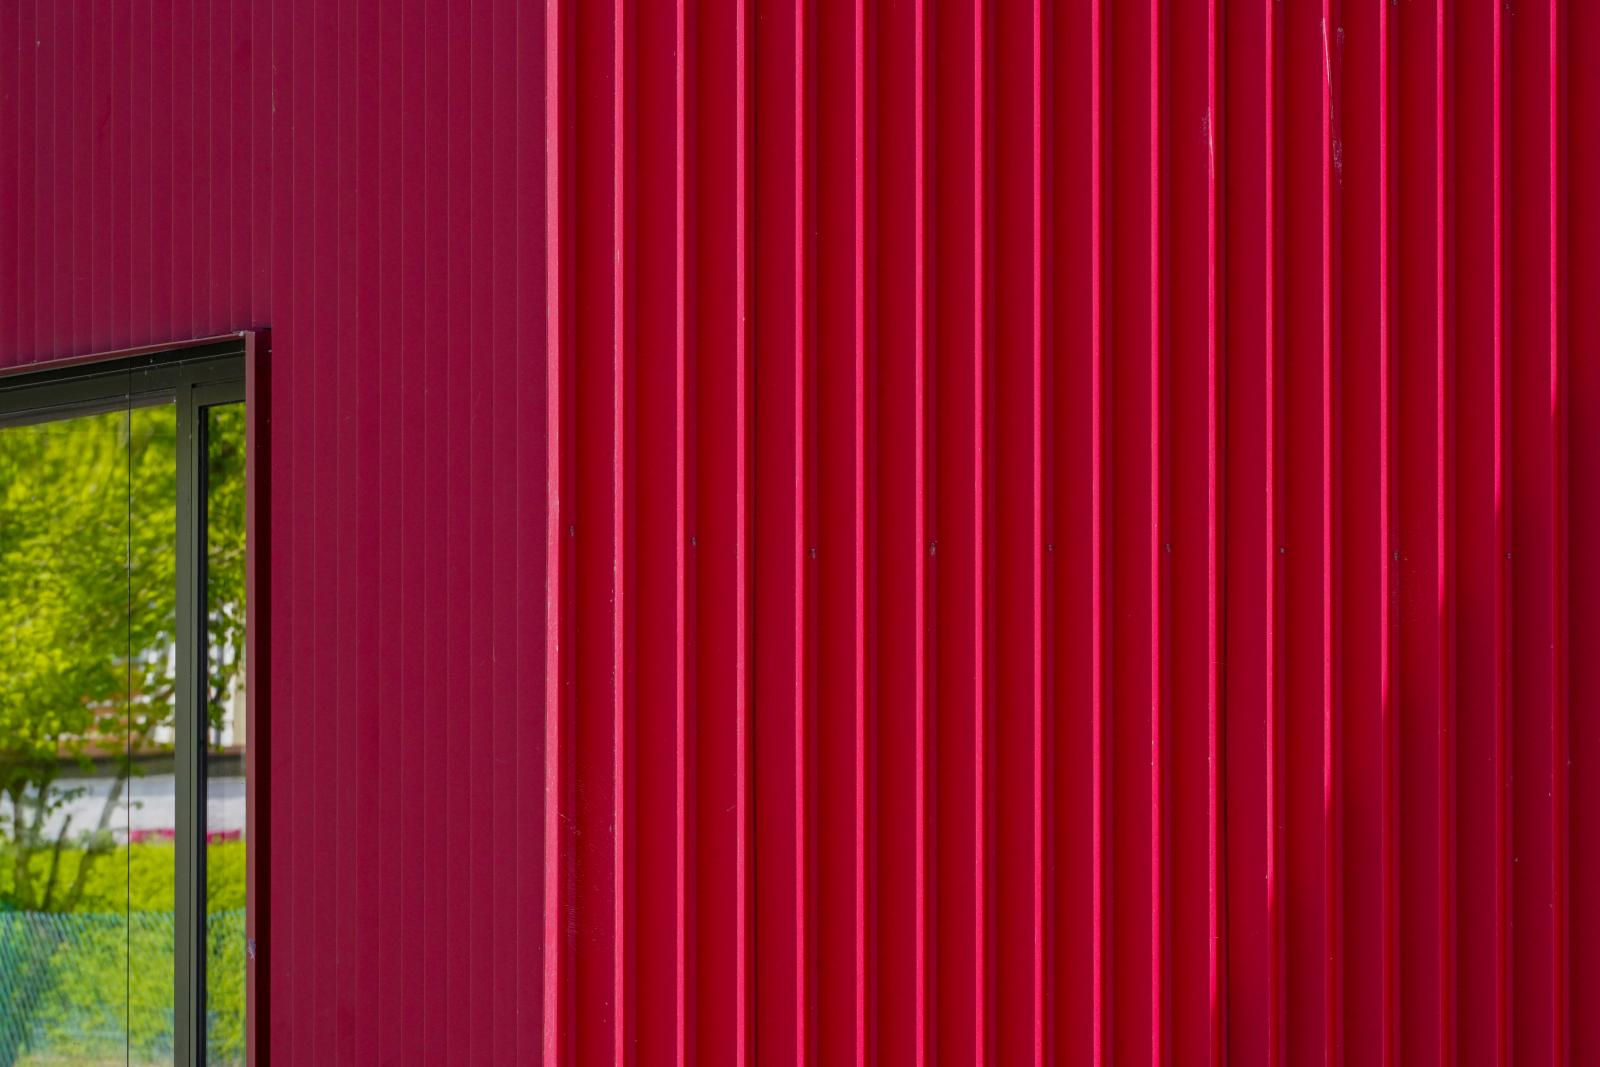 Crimson Rhythms: Vibrant red Palette | Buy this image